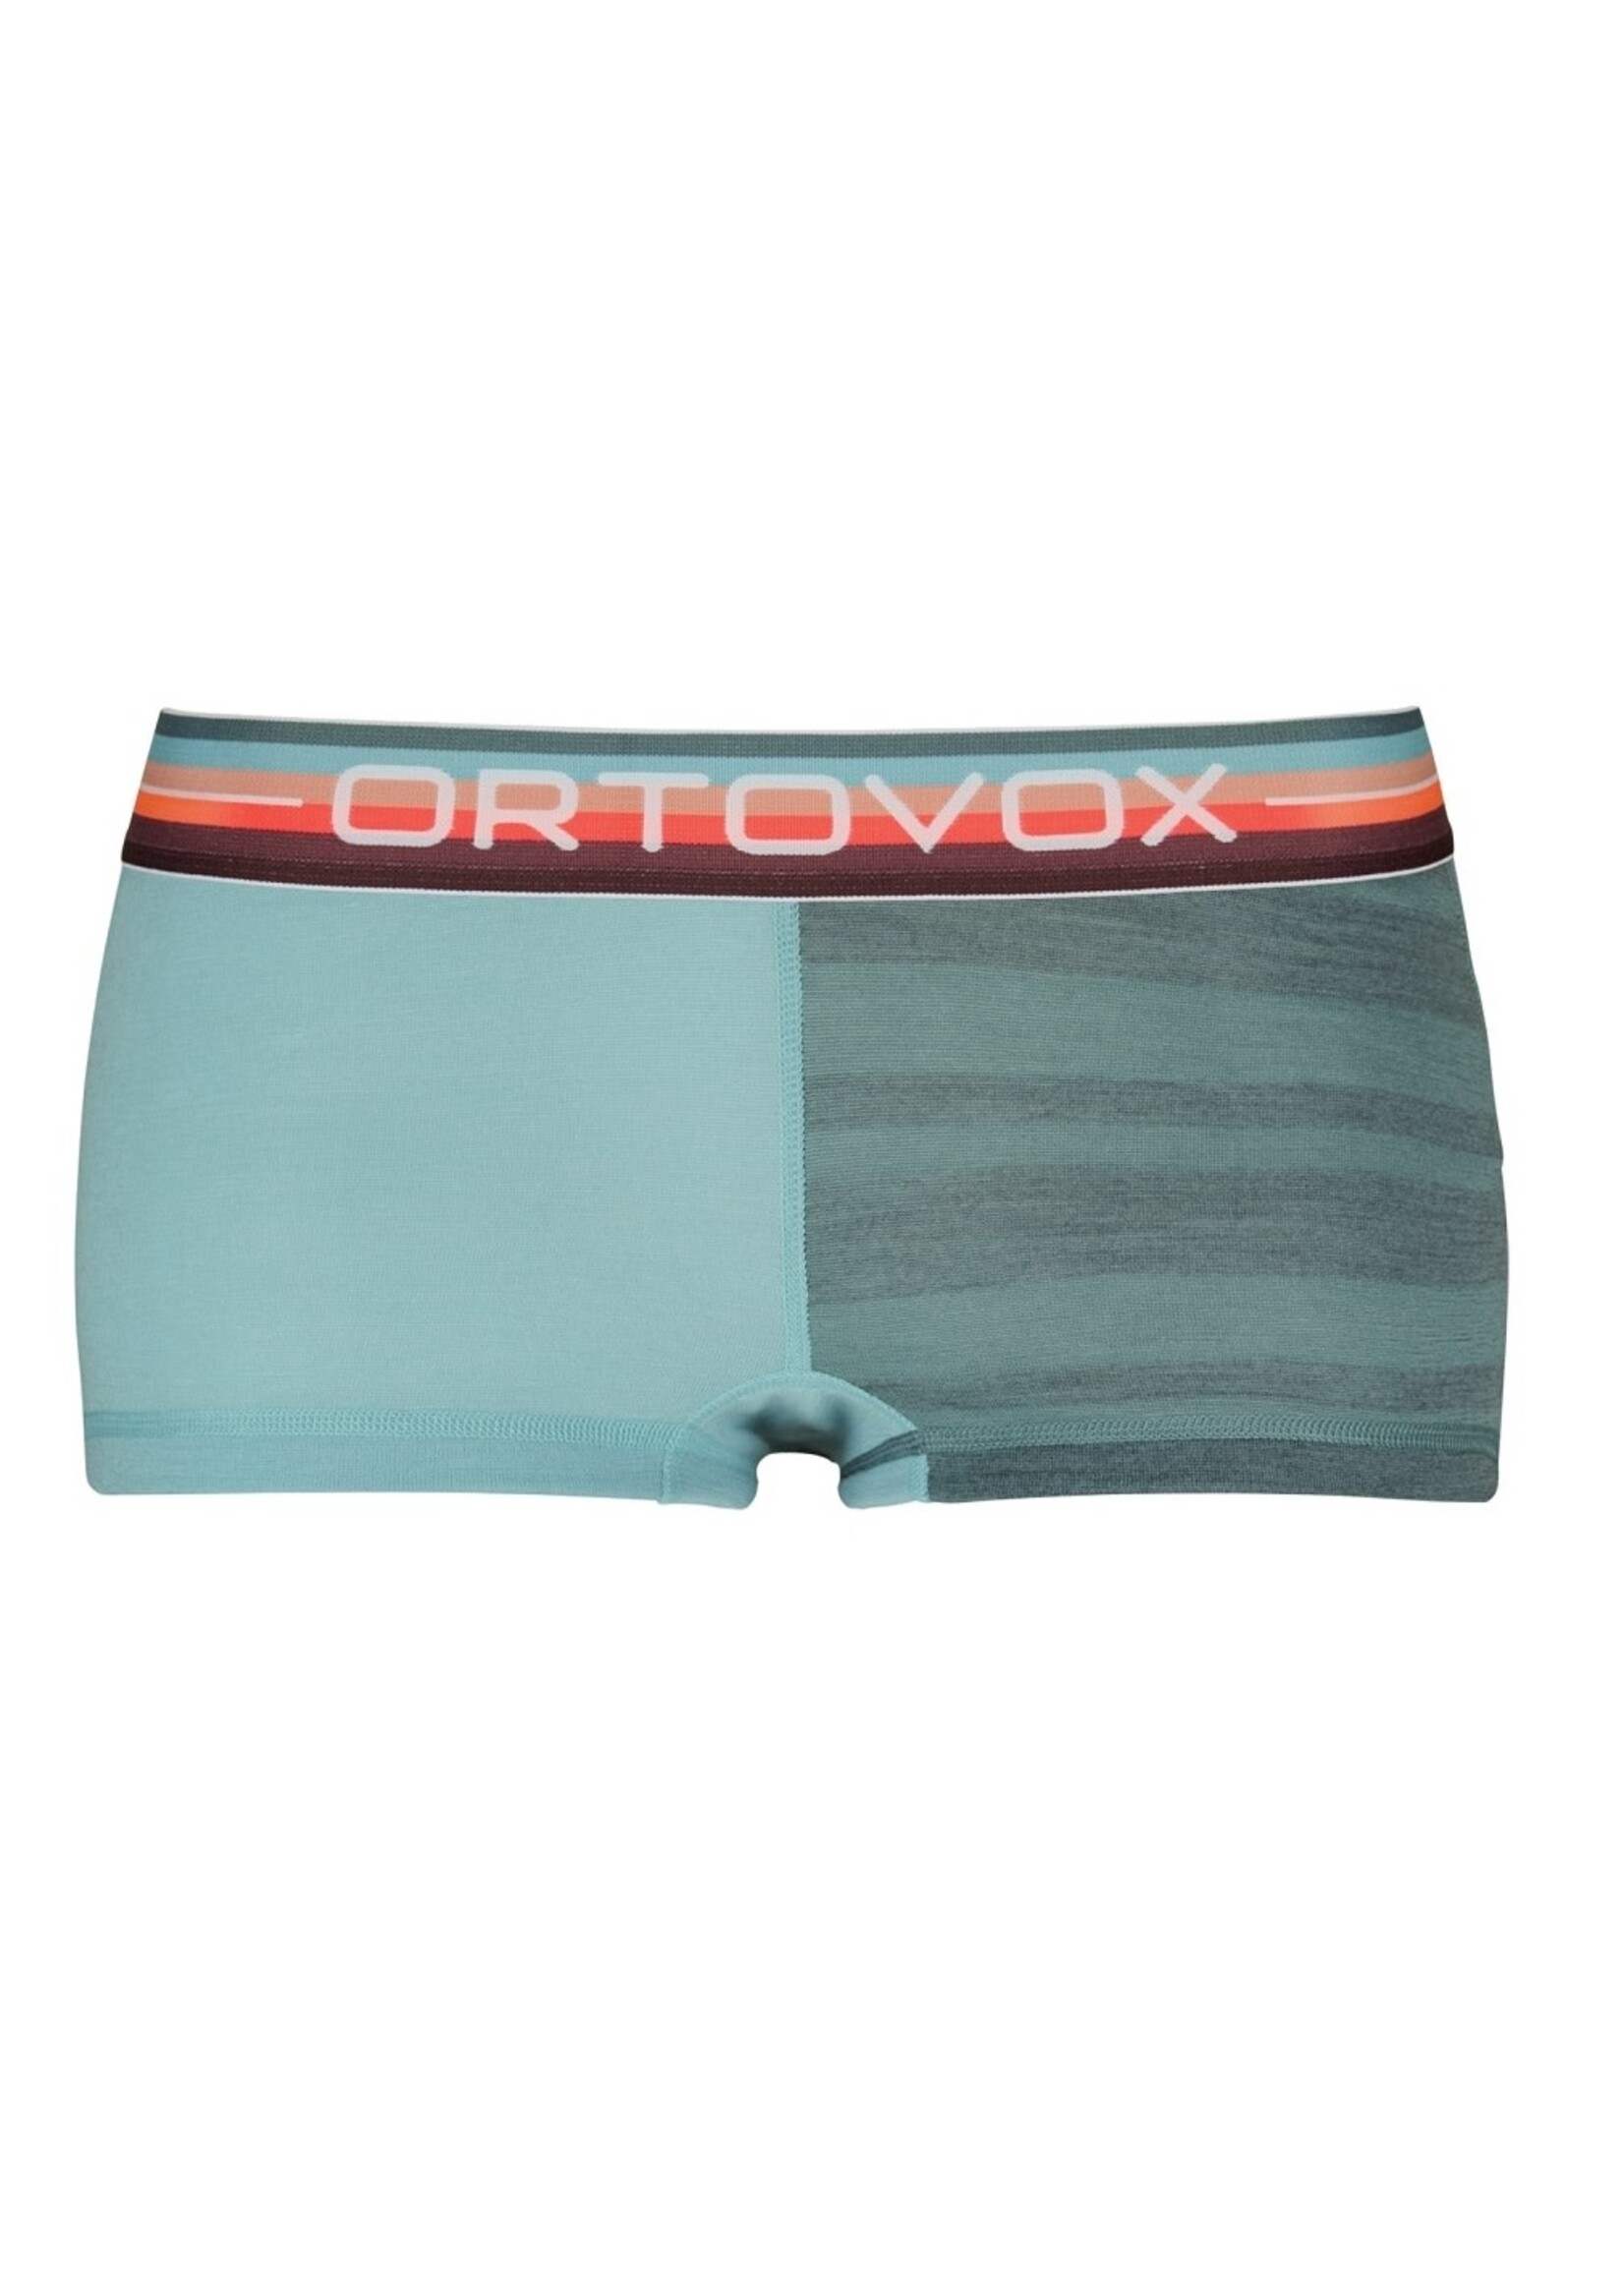 Ortovox Sous-vêtement Ortovox 185 Rock'N'Wool  Hot Pants - Femme